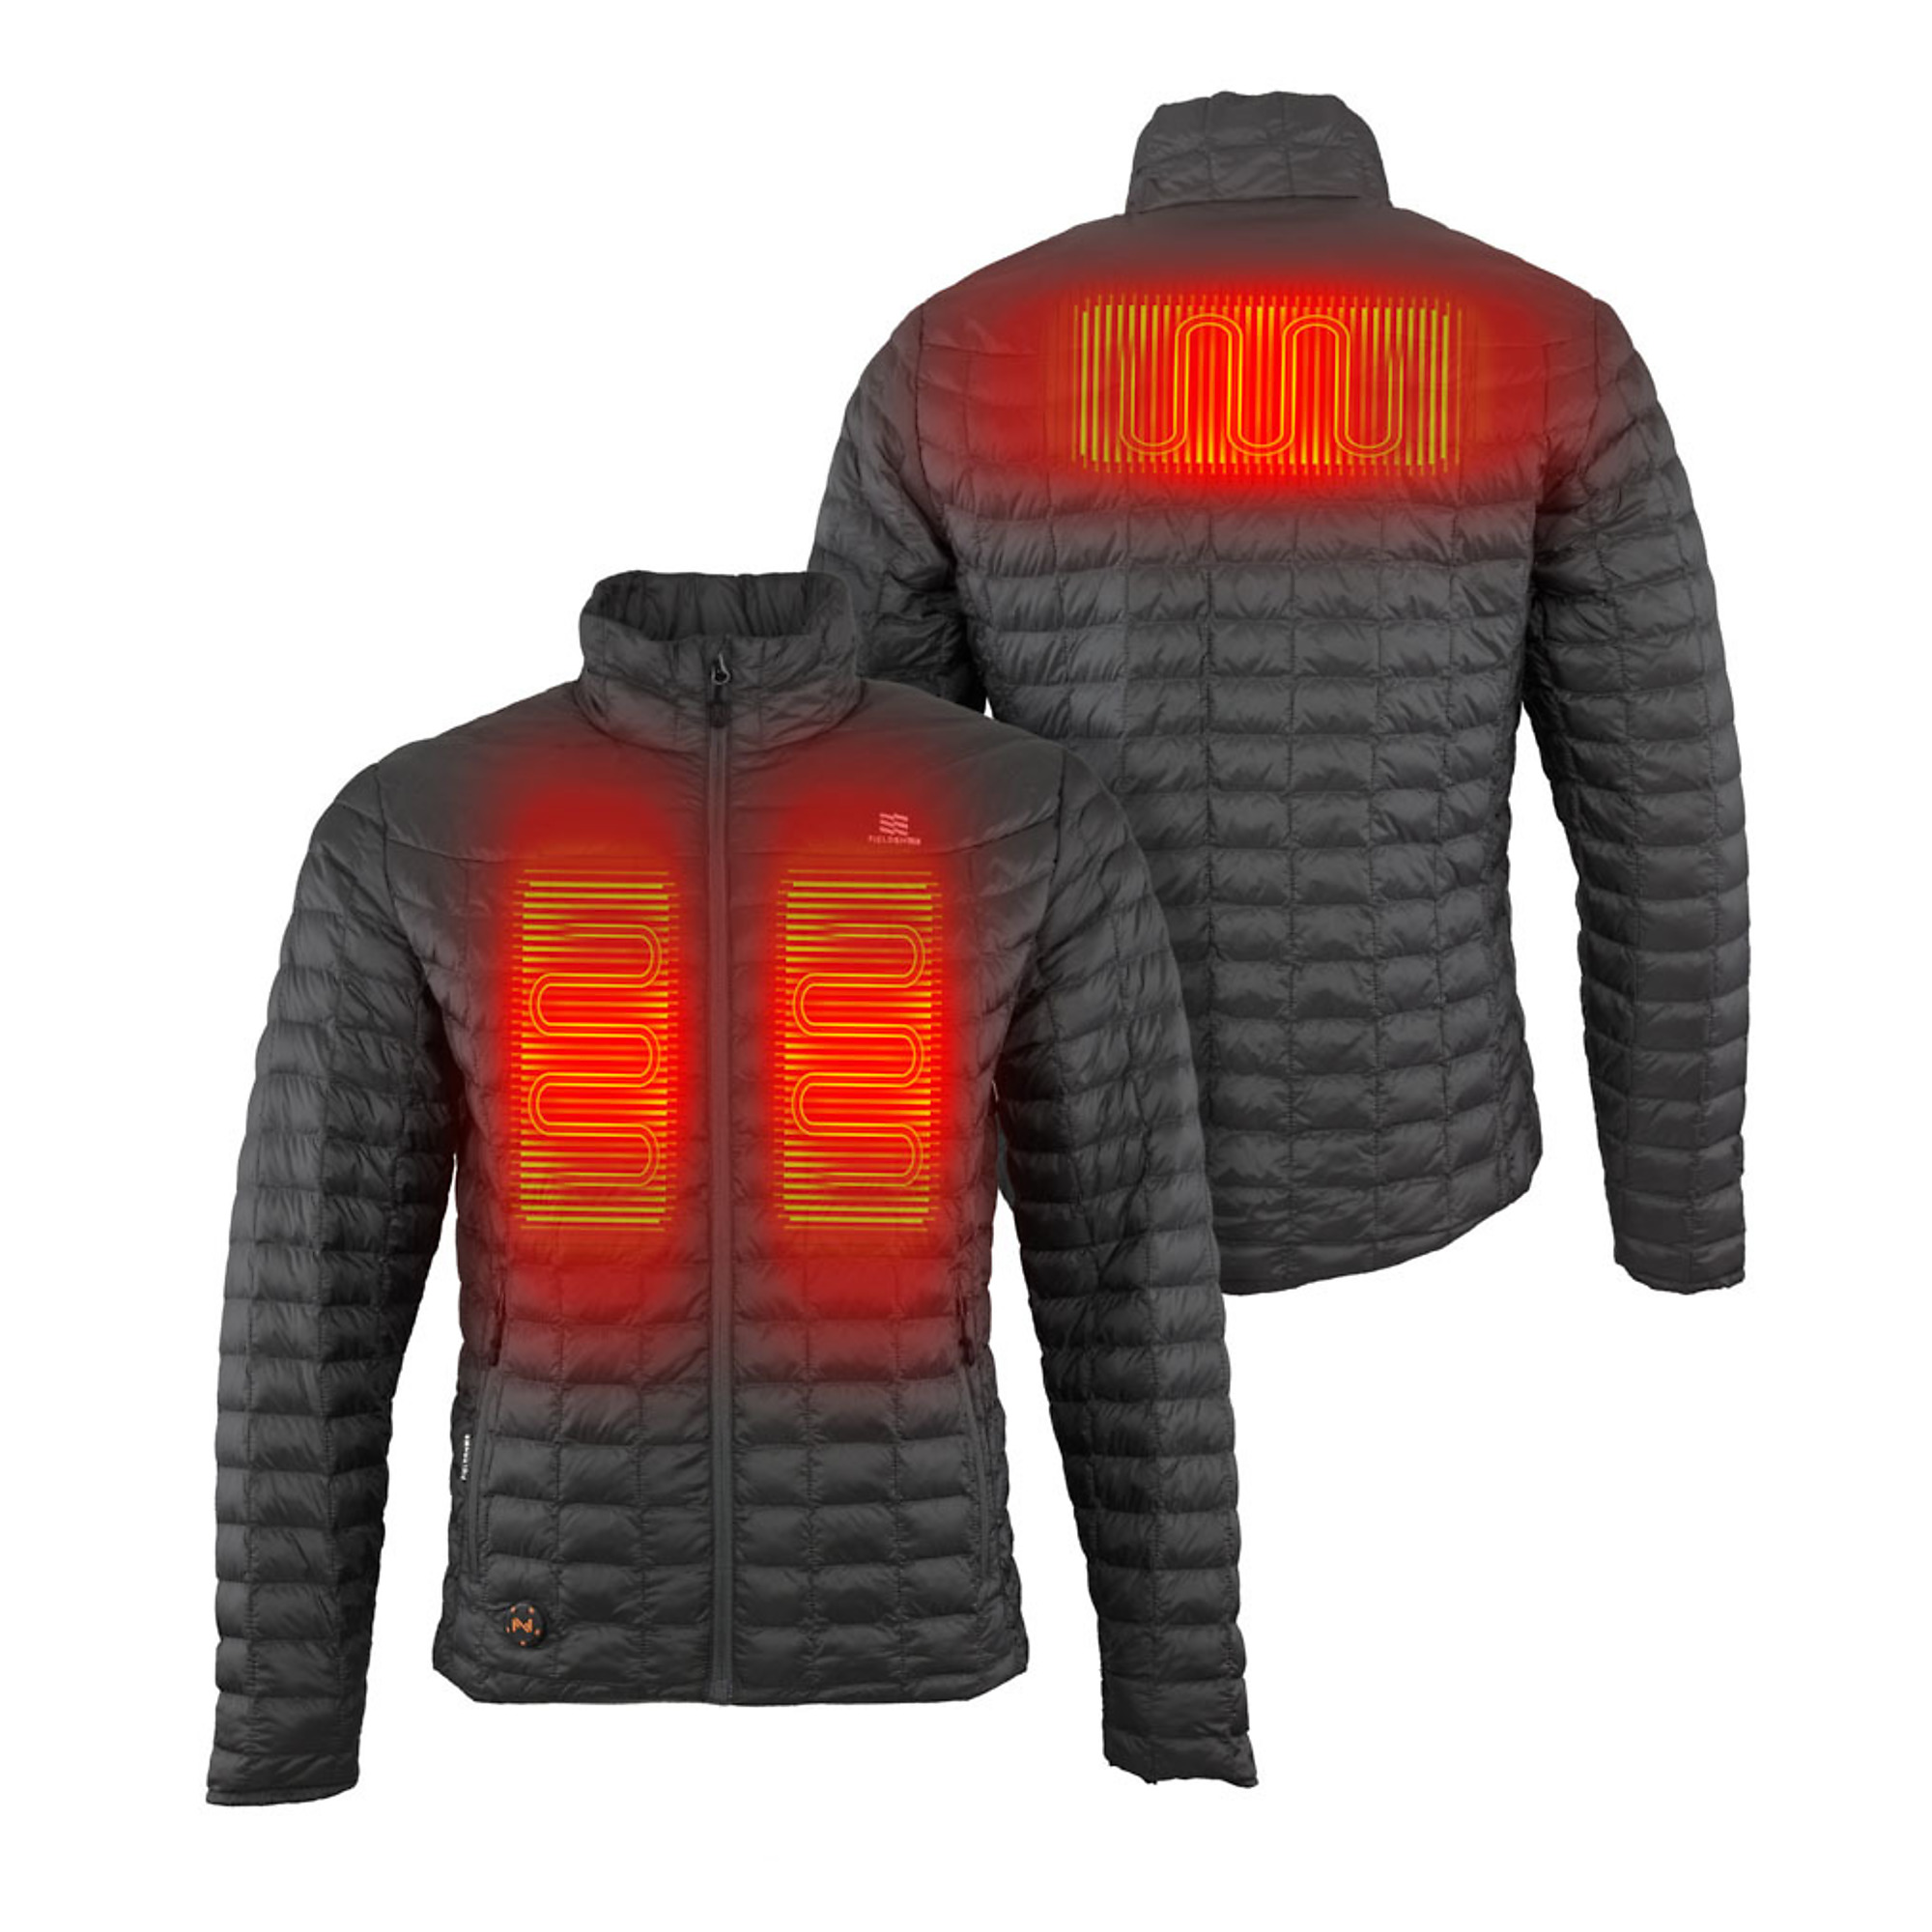 Fieldsheer, Men's Backcountry Heated Jacket with 7.4v Battery, Size 2XL, Color Black, Model MWMJ04010620